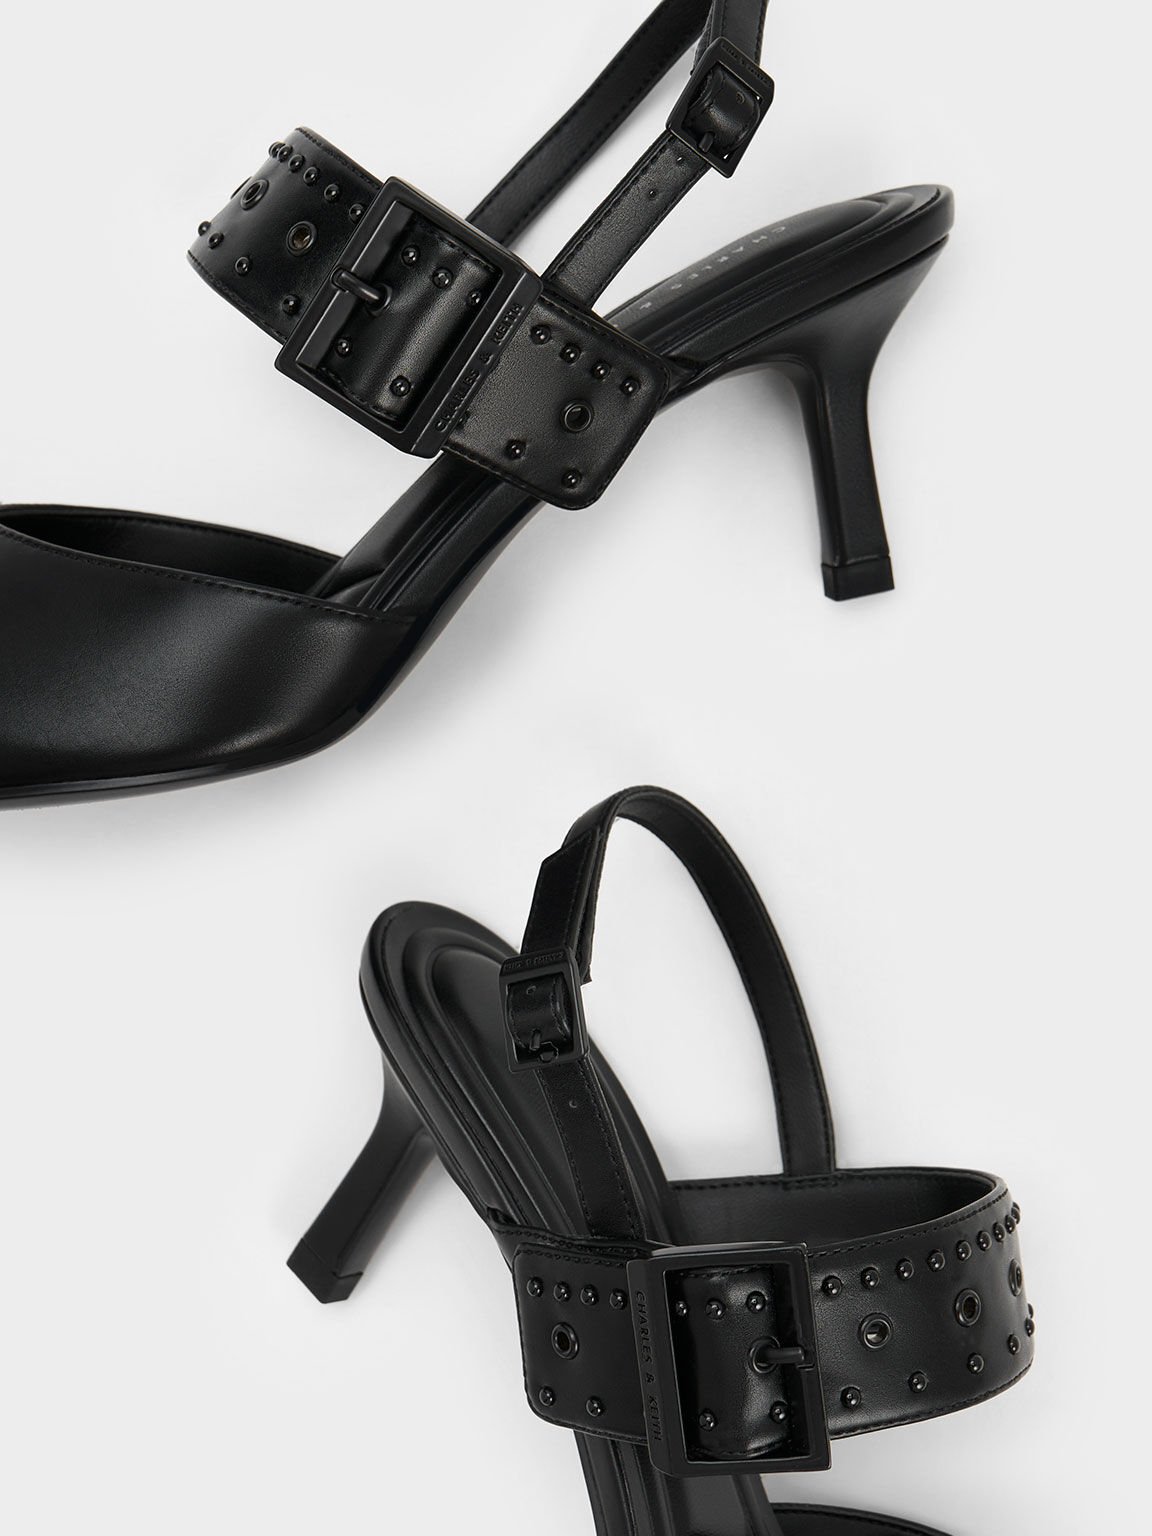 Sepatu Pumps Sepphe Grommet Slingback, Black, hi-res